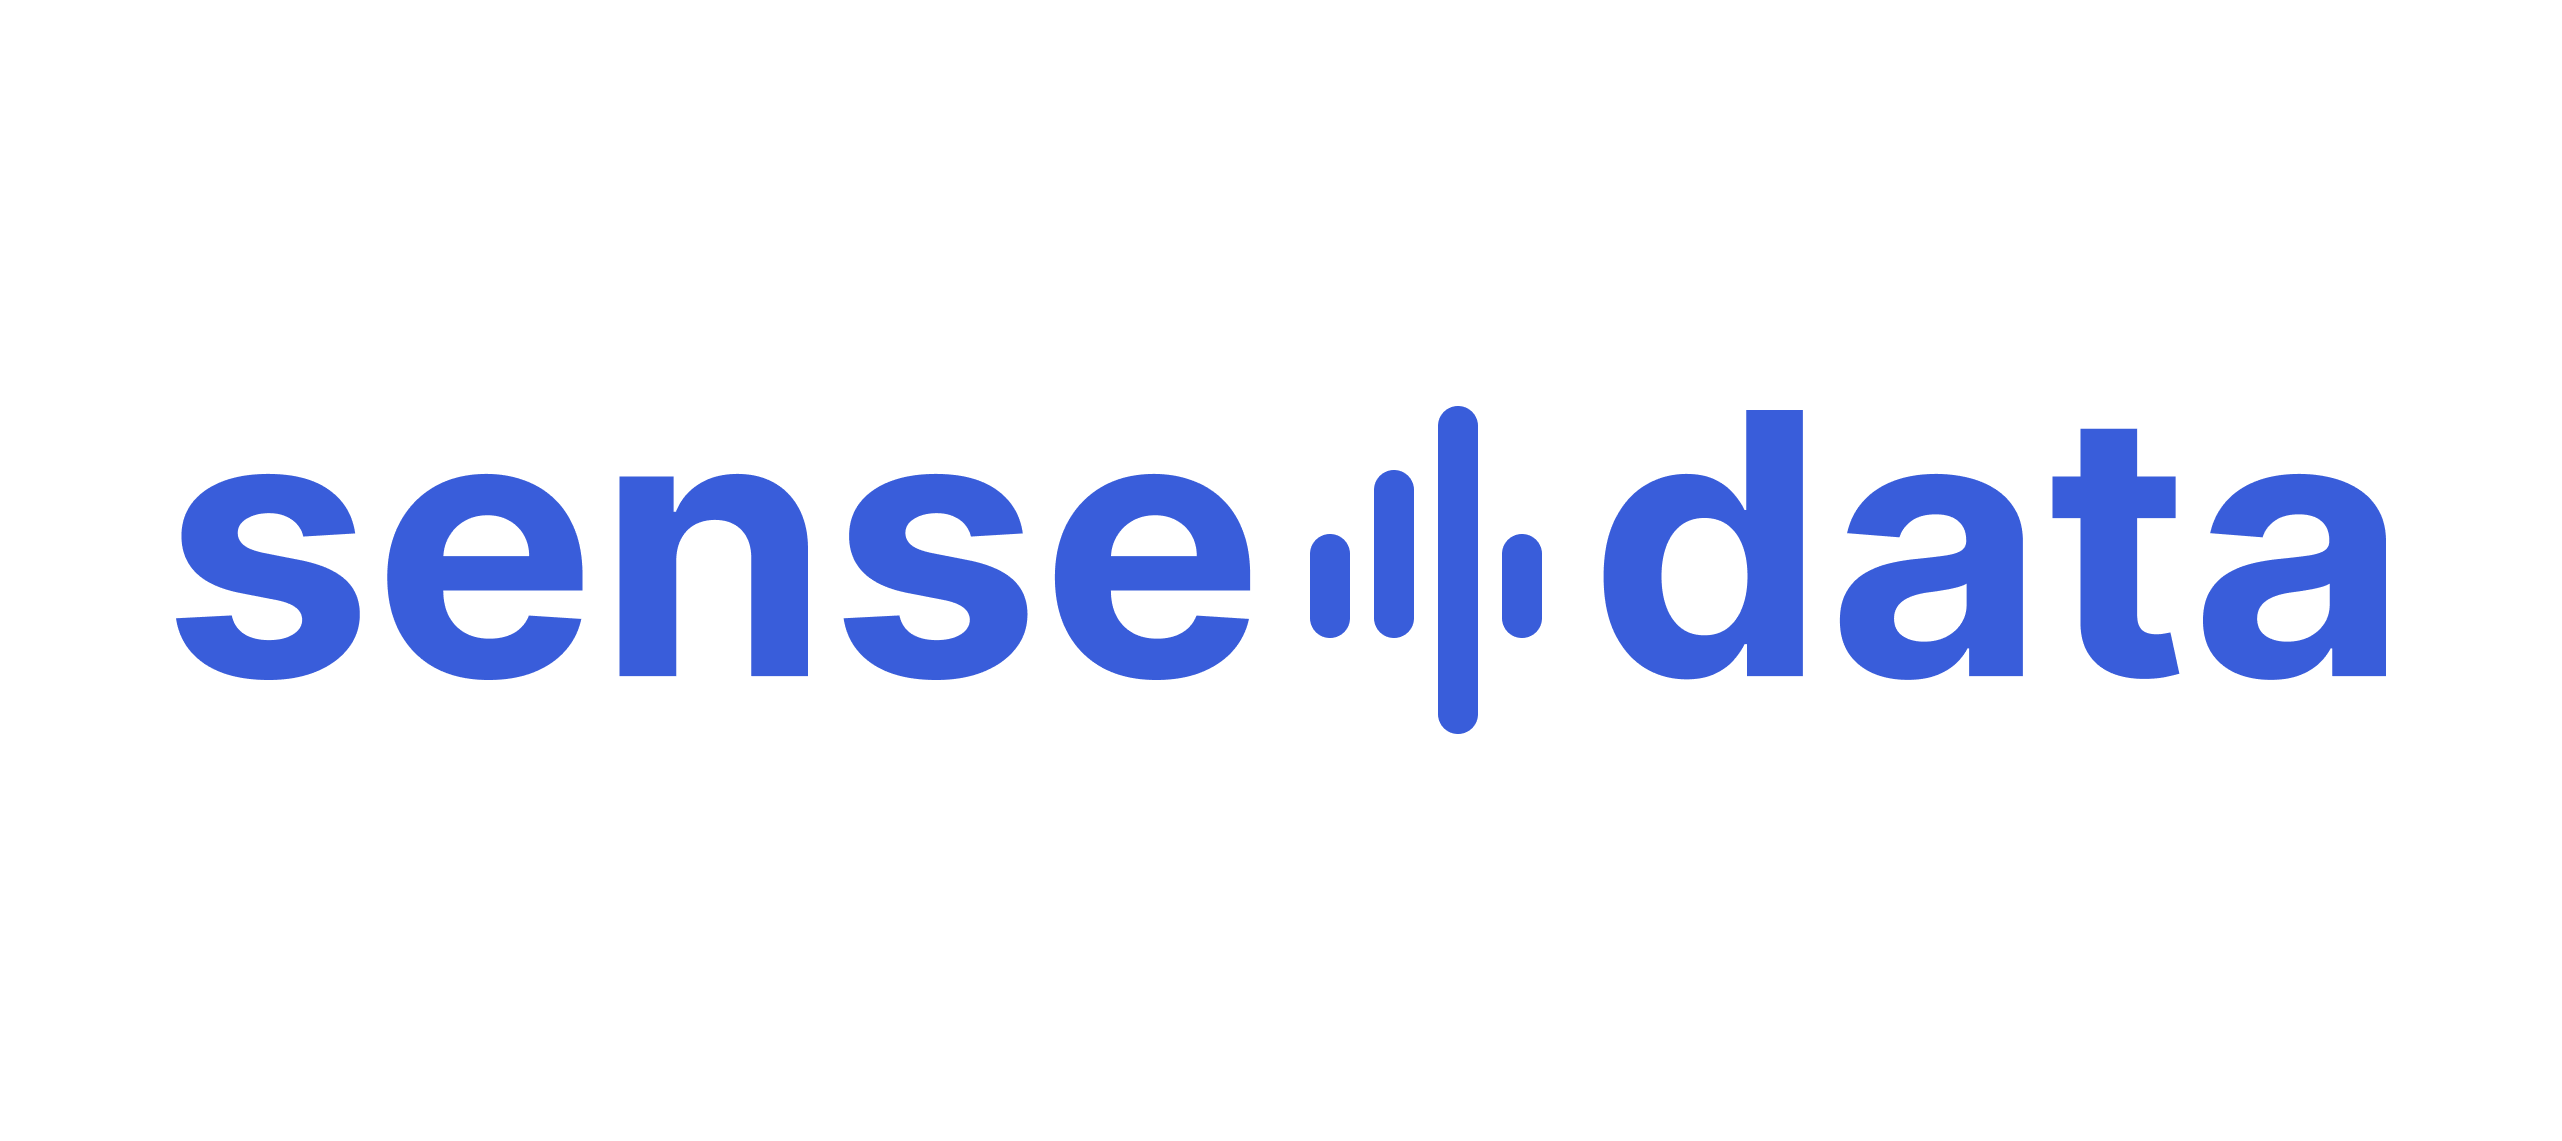 sense4data-logo